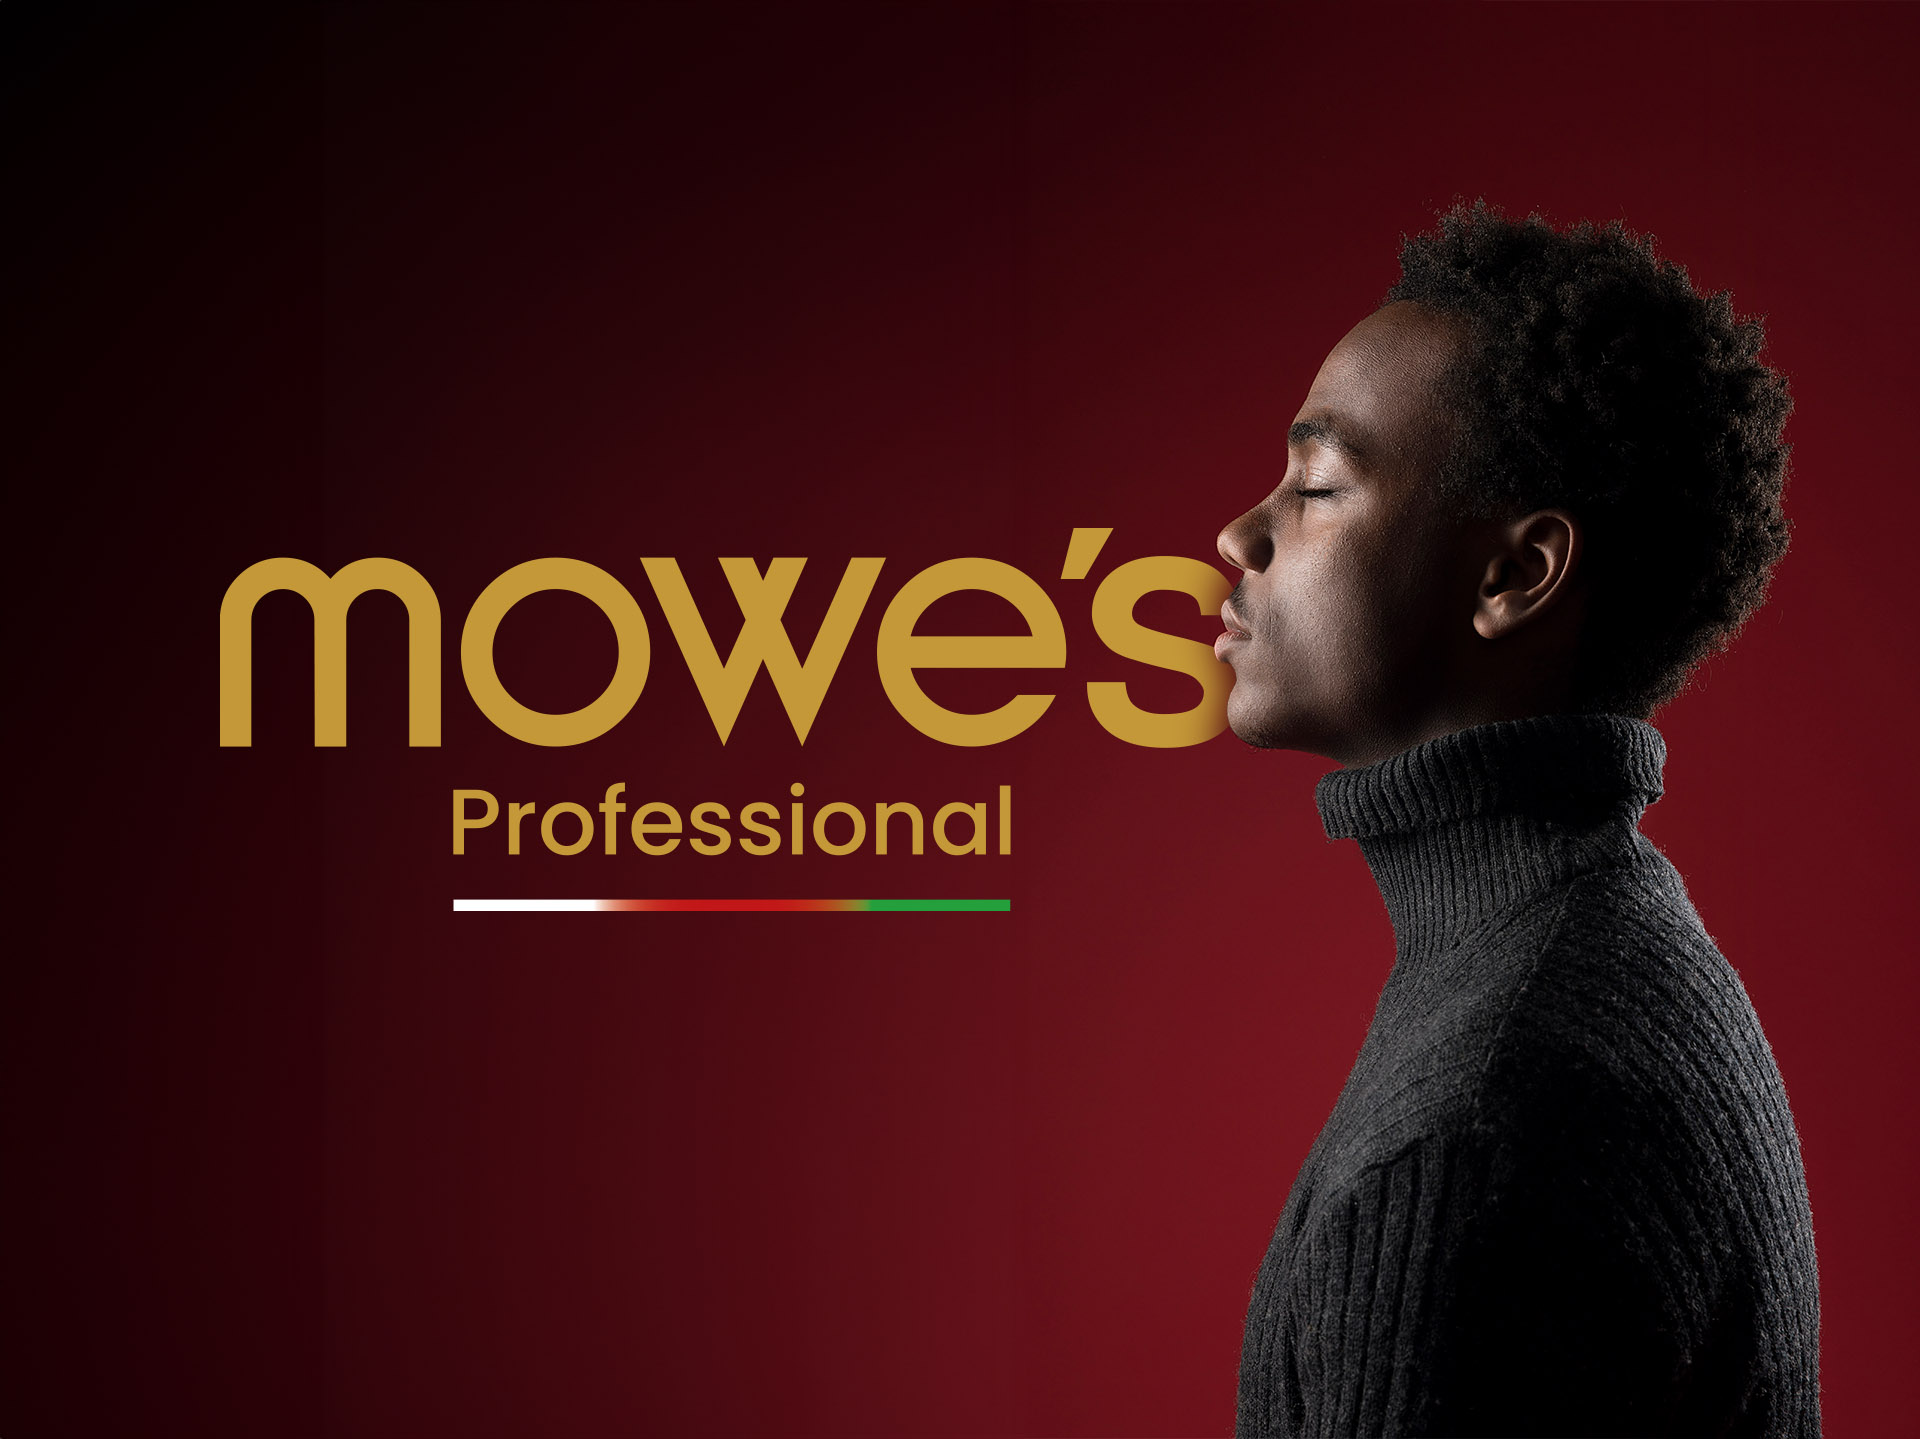 mowe’s the professional